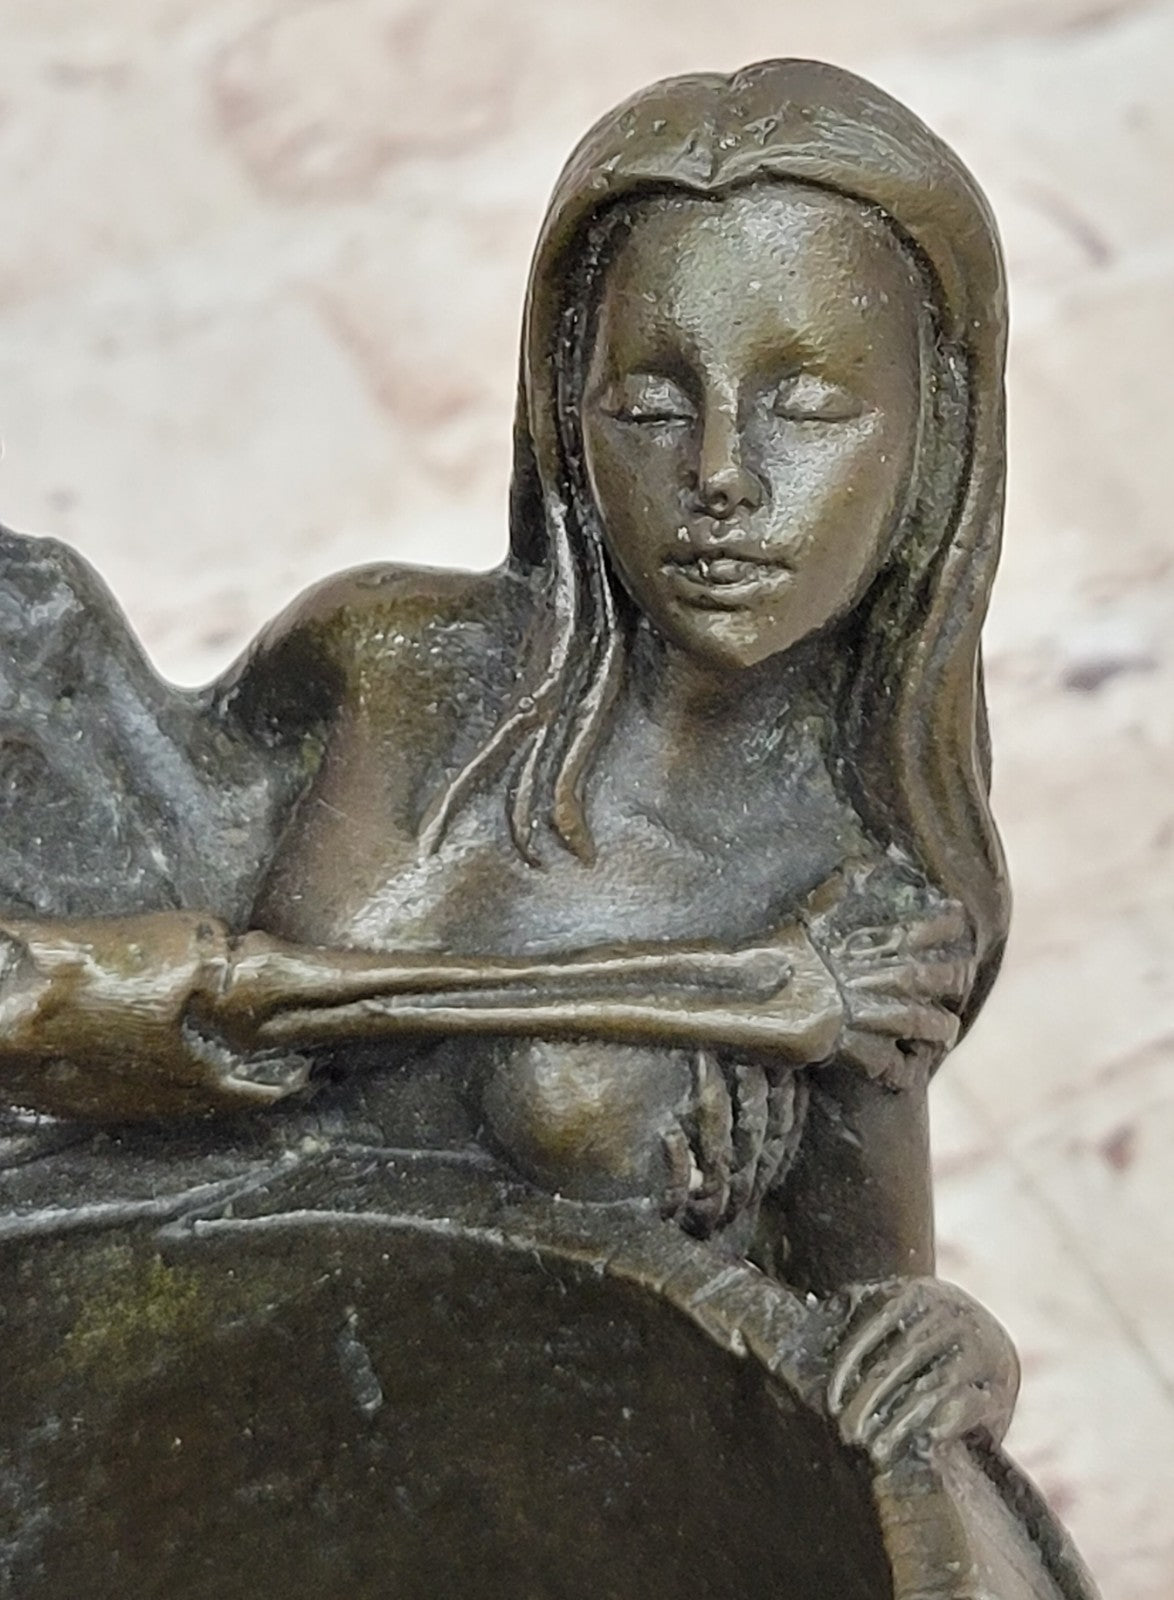 Nude Girl Brush Pot Pen Holder Pen Stand Bronze Sculpture Handcrafted Decor Gift